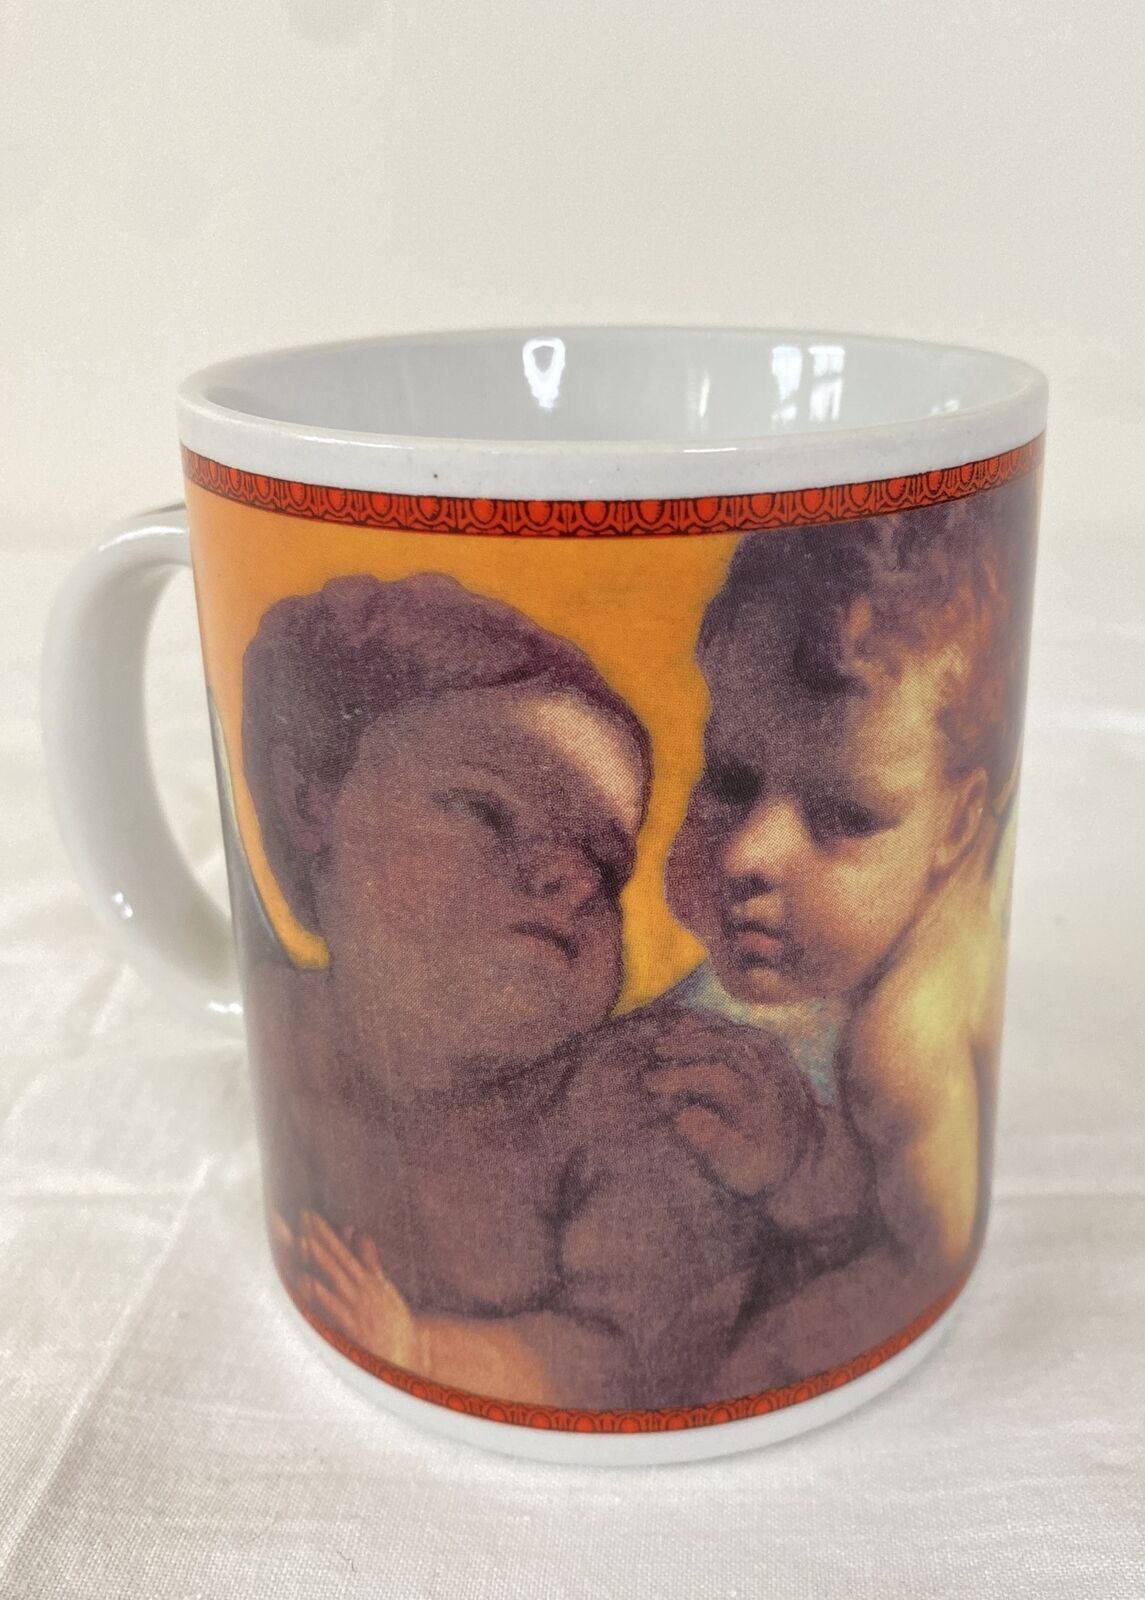 RARE CAFE ARTS CHERUBS ANGLES MUG Cafe Arts Henriksen Imports Ceramic Cup Mug